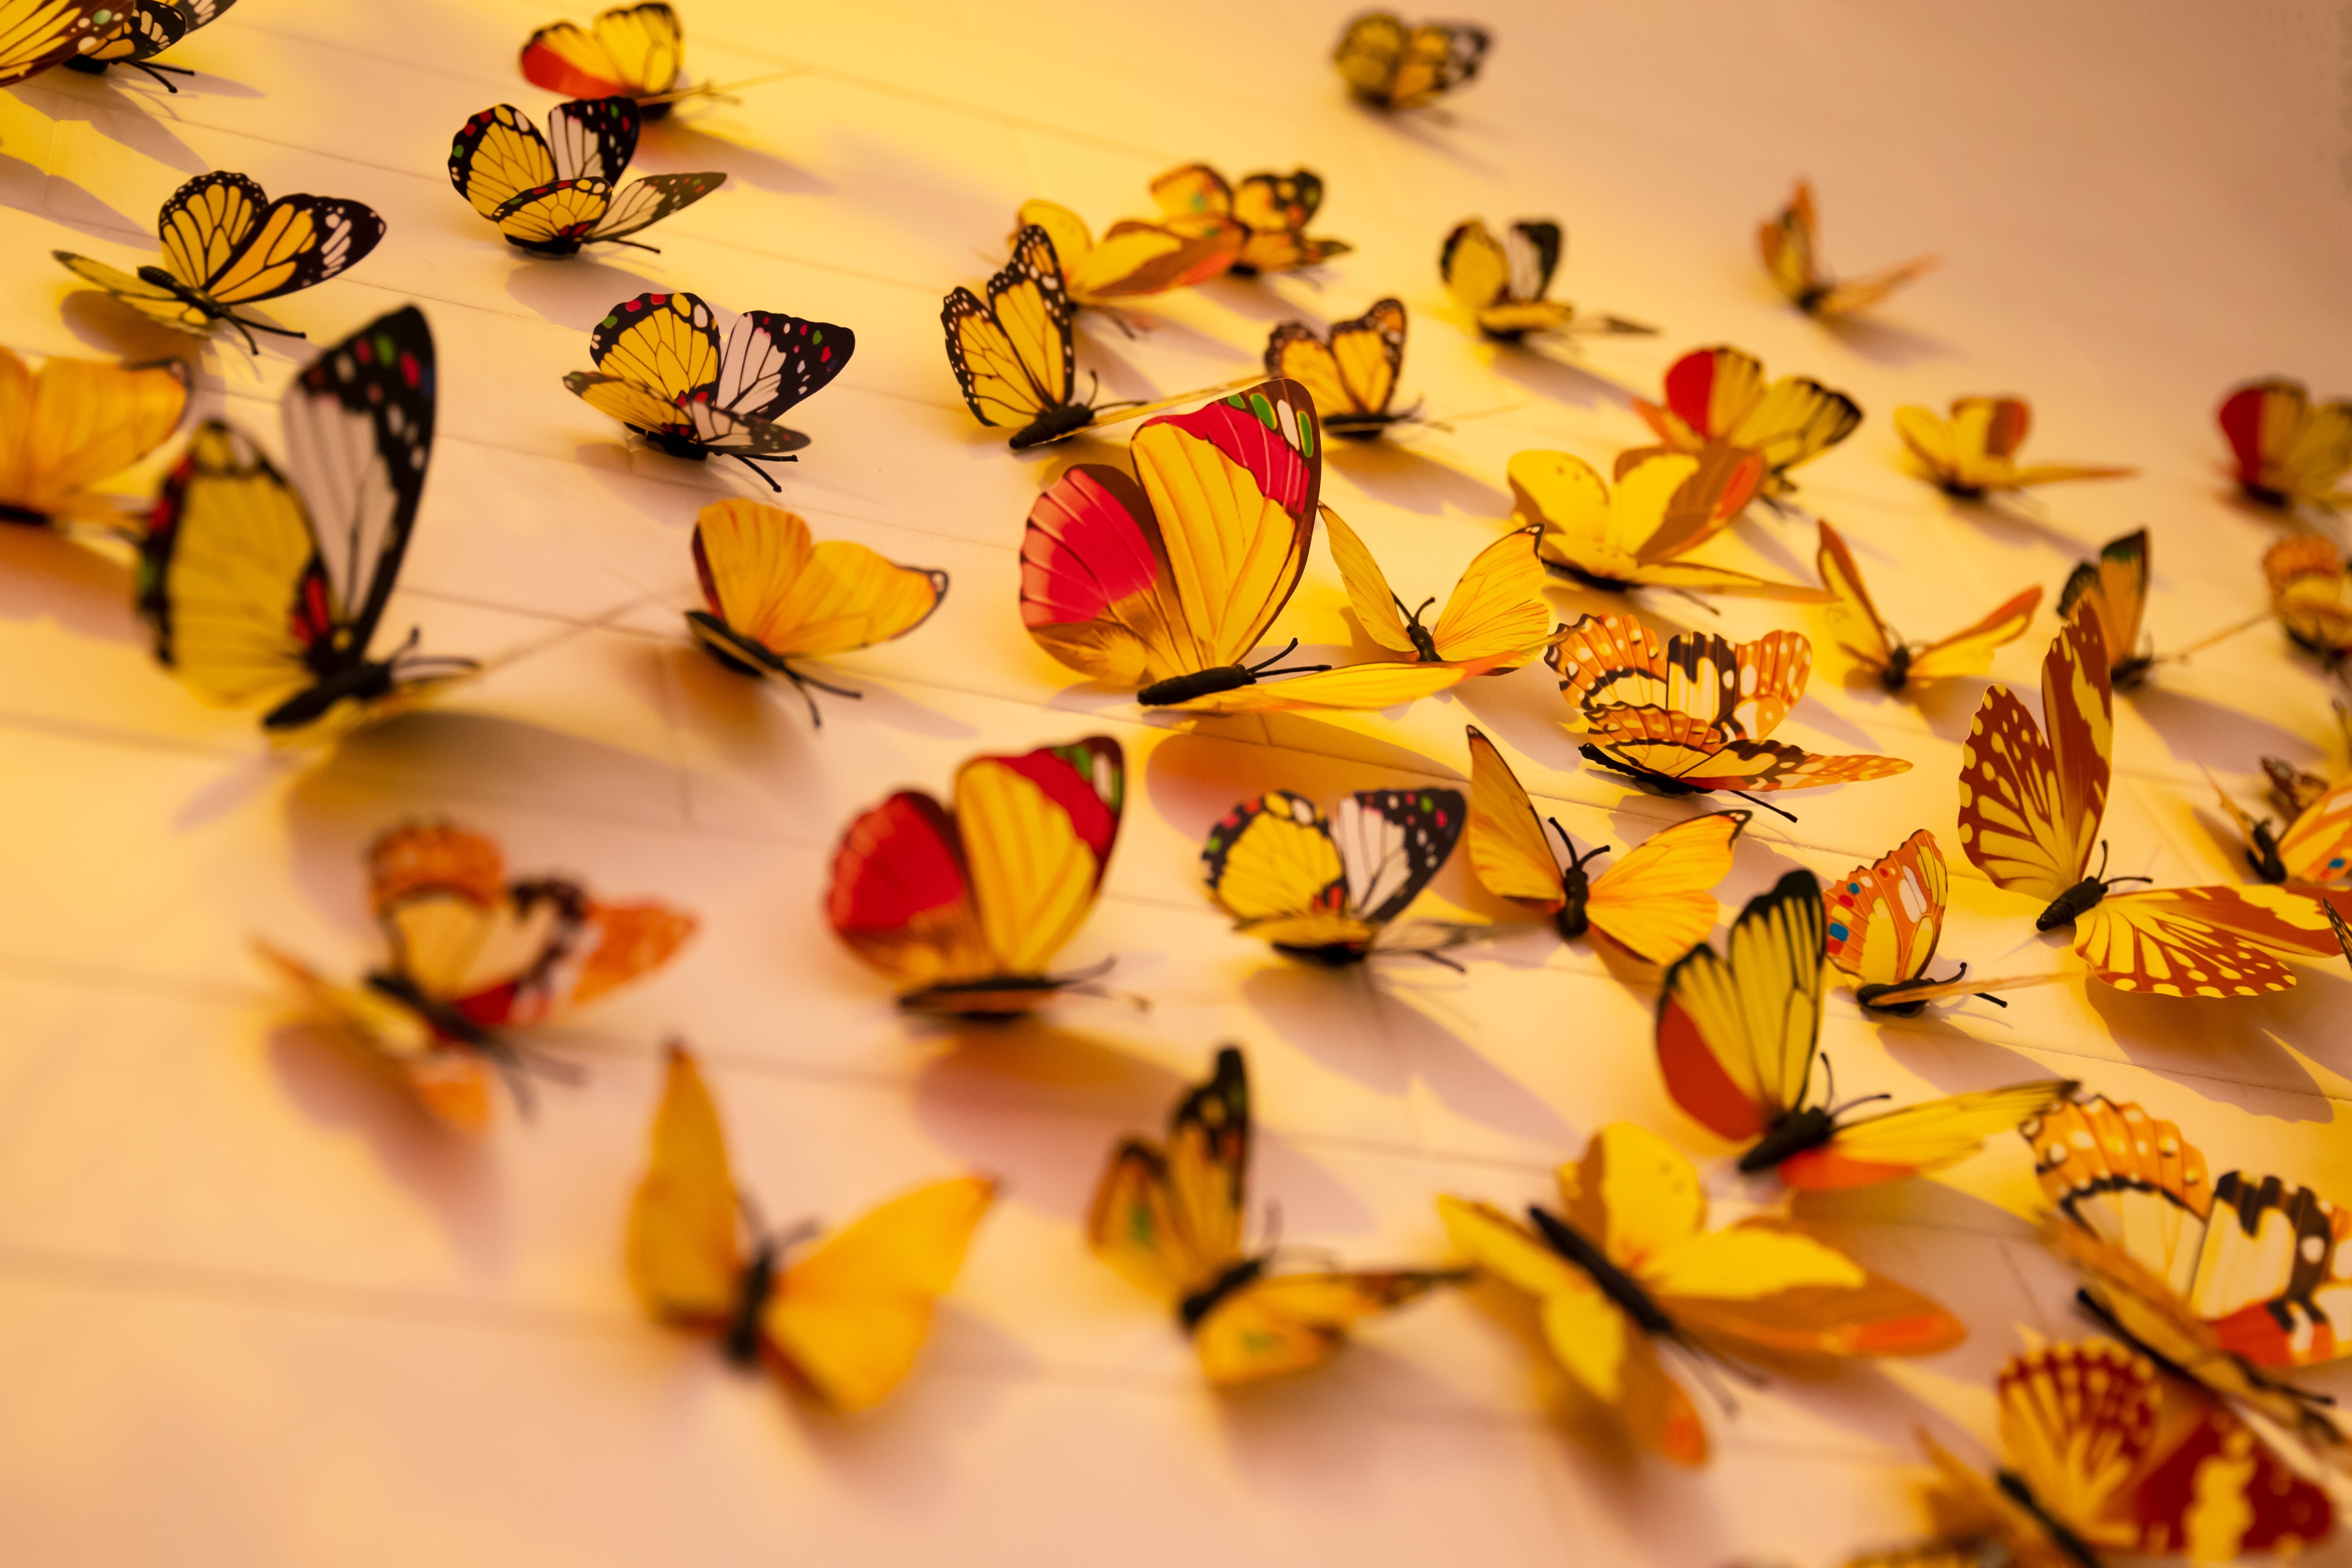 HD wallpaper, Wall Decorations, Colorful Butterflies, Closeup, Beautiful, Aesthetic, 5K, Assorted, Yellow Butterflies